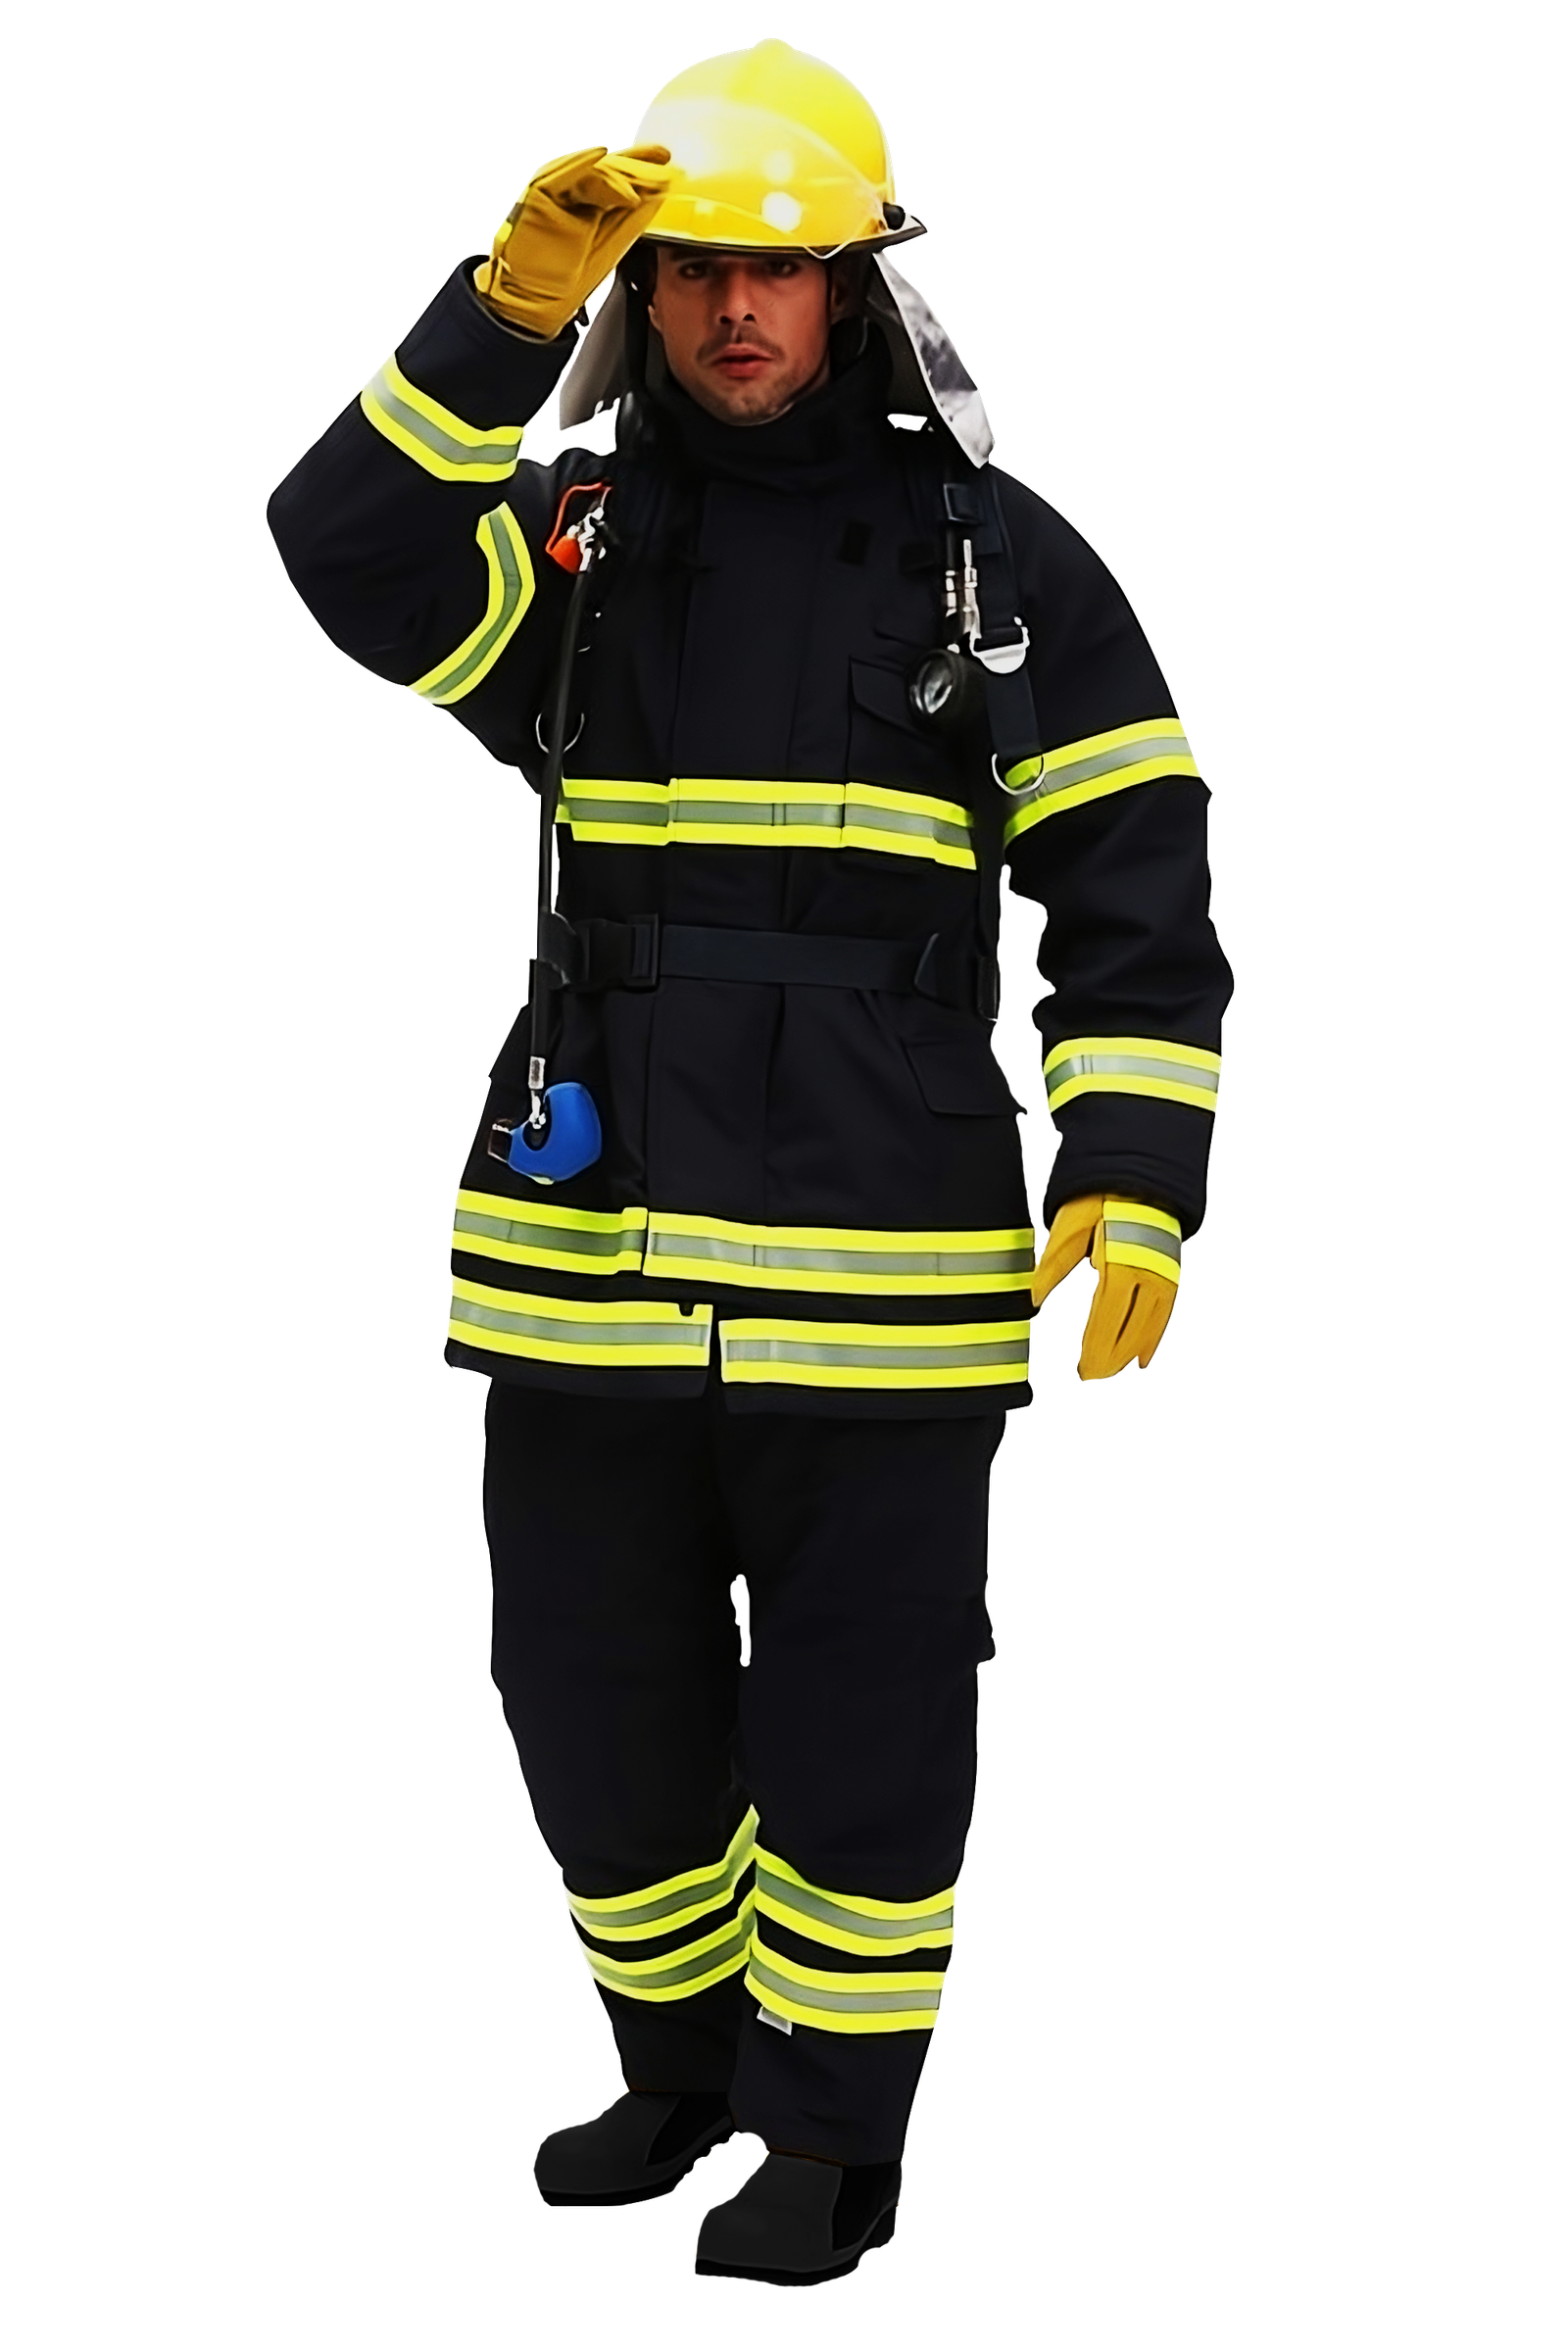 Fire Suit FIRE -VHF-C1